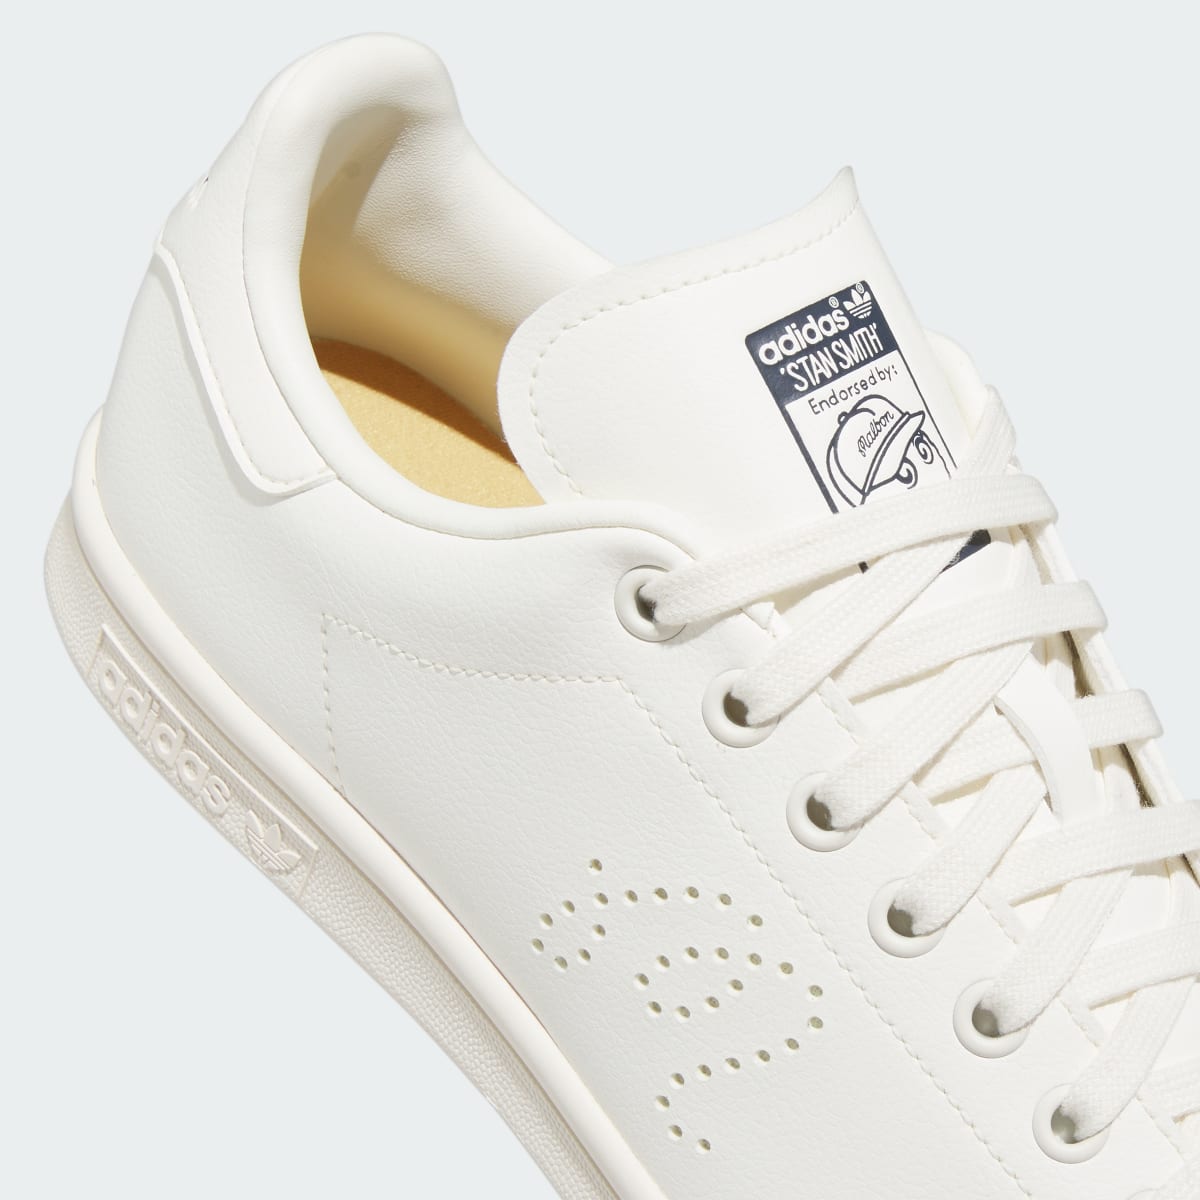 Adidas x Malbon Stan Smith Spikeless Golf Shoes. 13